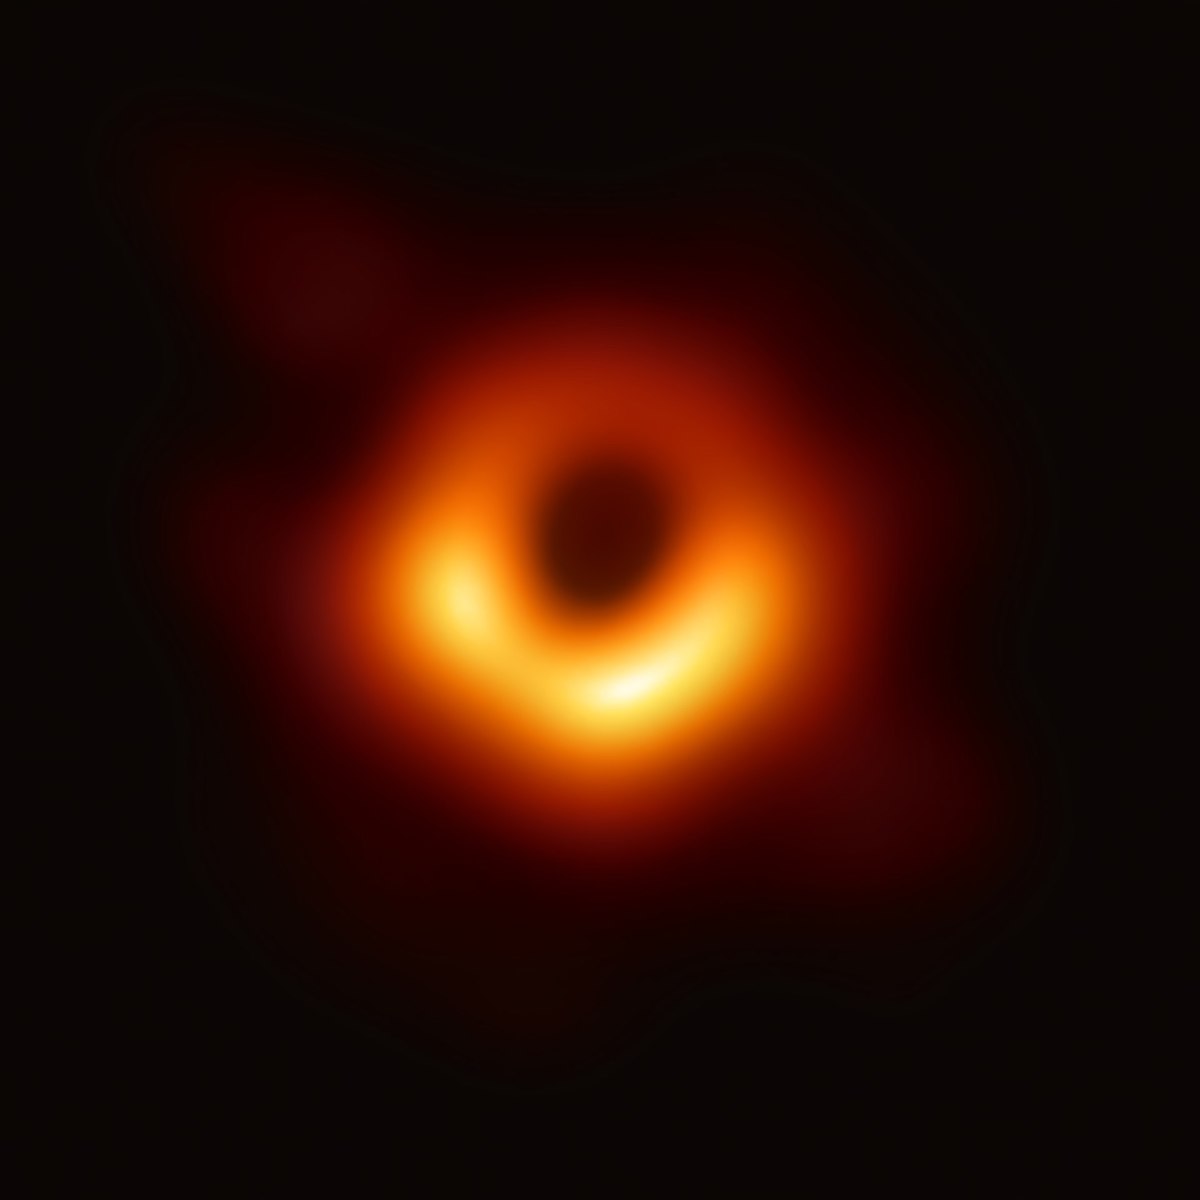 wormholes-blackholes-and-singularity